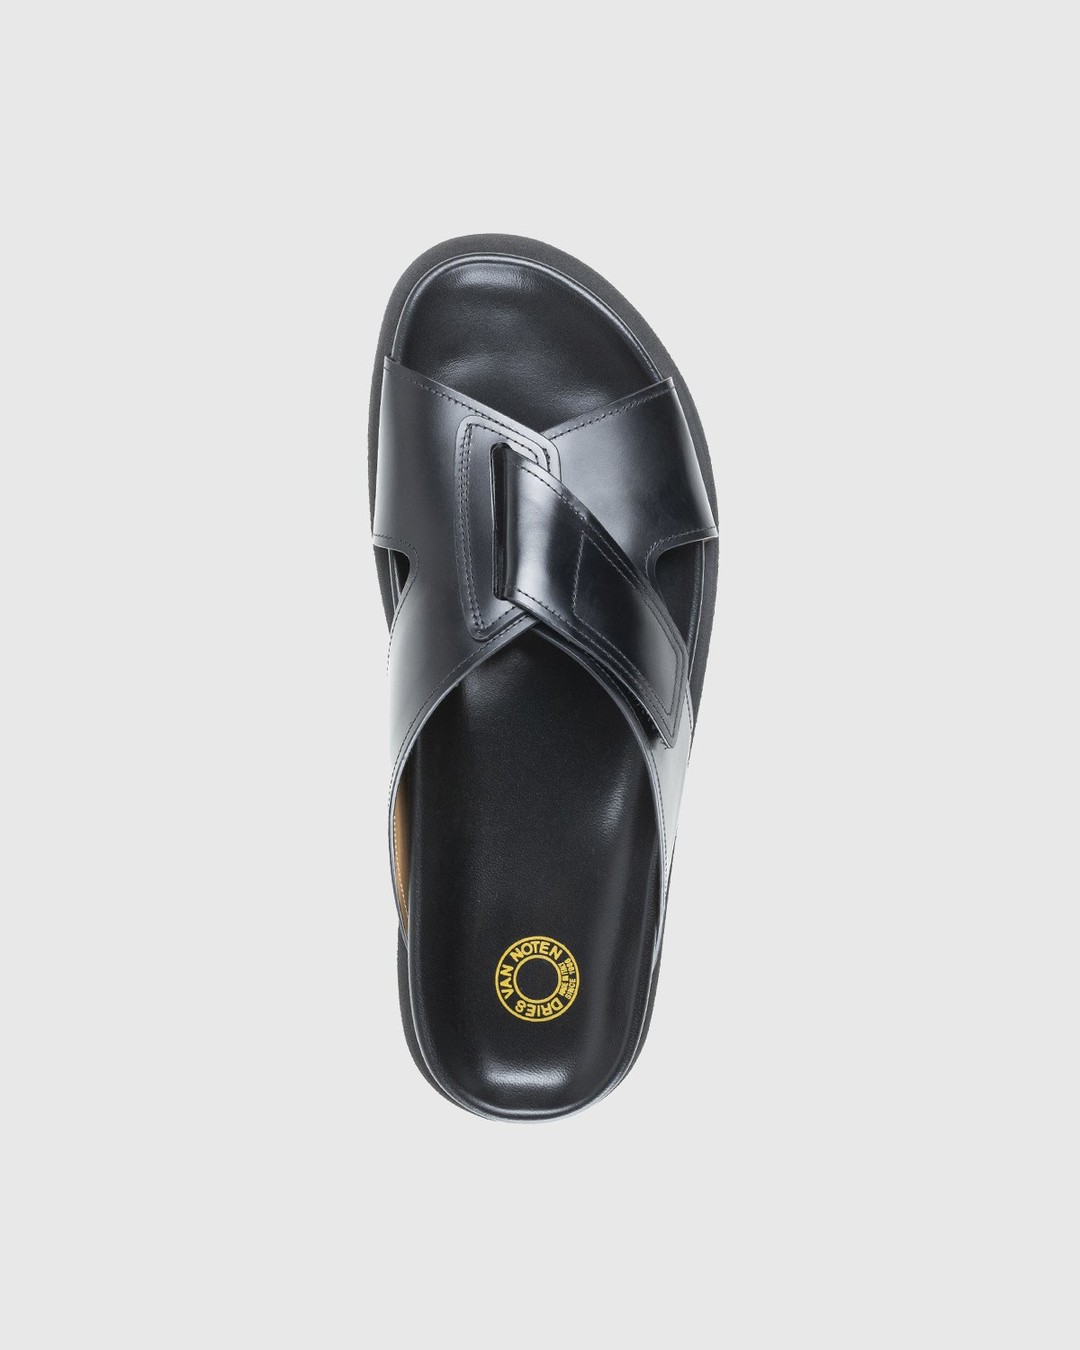 Dries van Noten – Leather Criss-Cross Sandals Black - Sandals & Slides - Black - Image 5